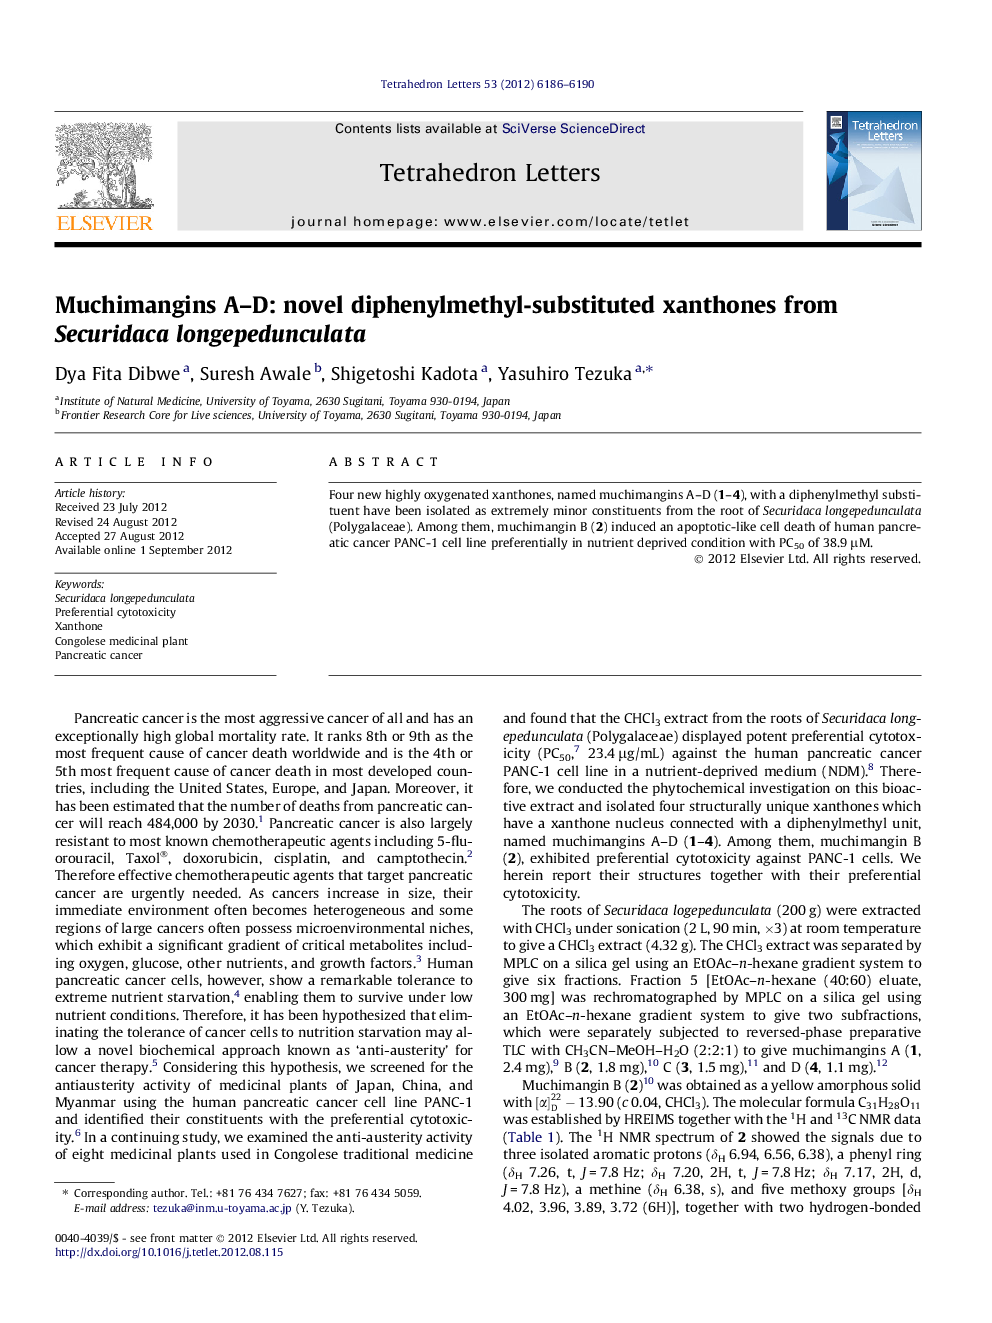 Muchimangins A-D: novel diphenylmethyl-substituted xanthones from Securidaca longepedunculata